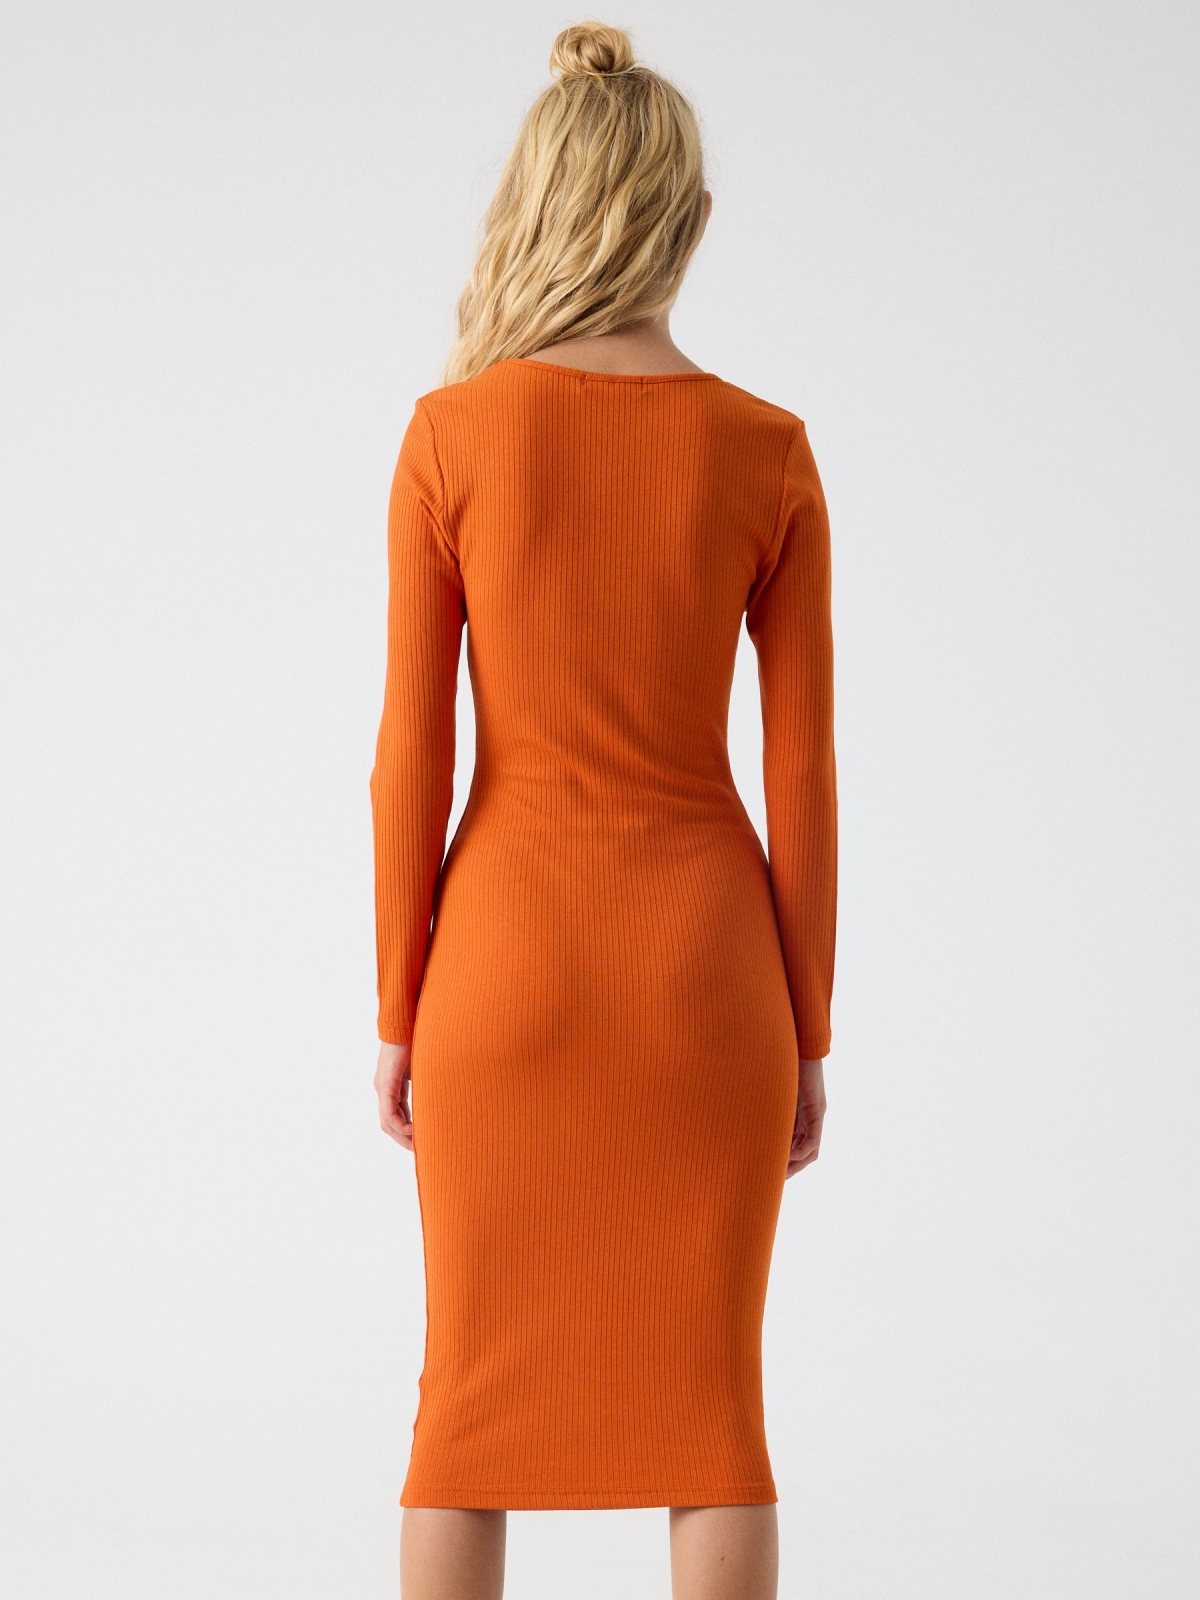 Midi dress with knot neckline orange middle back view